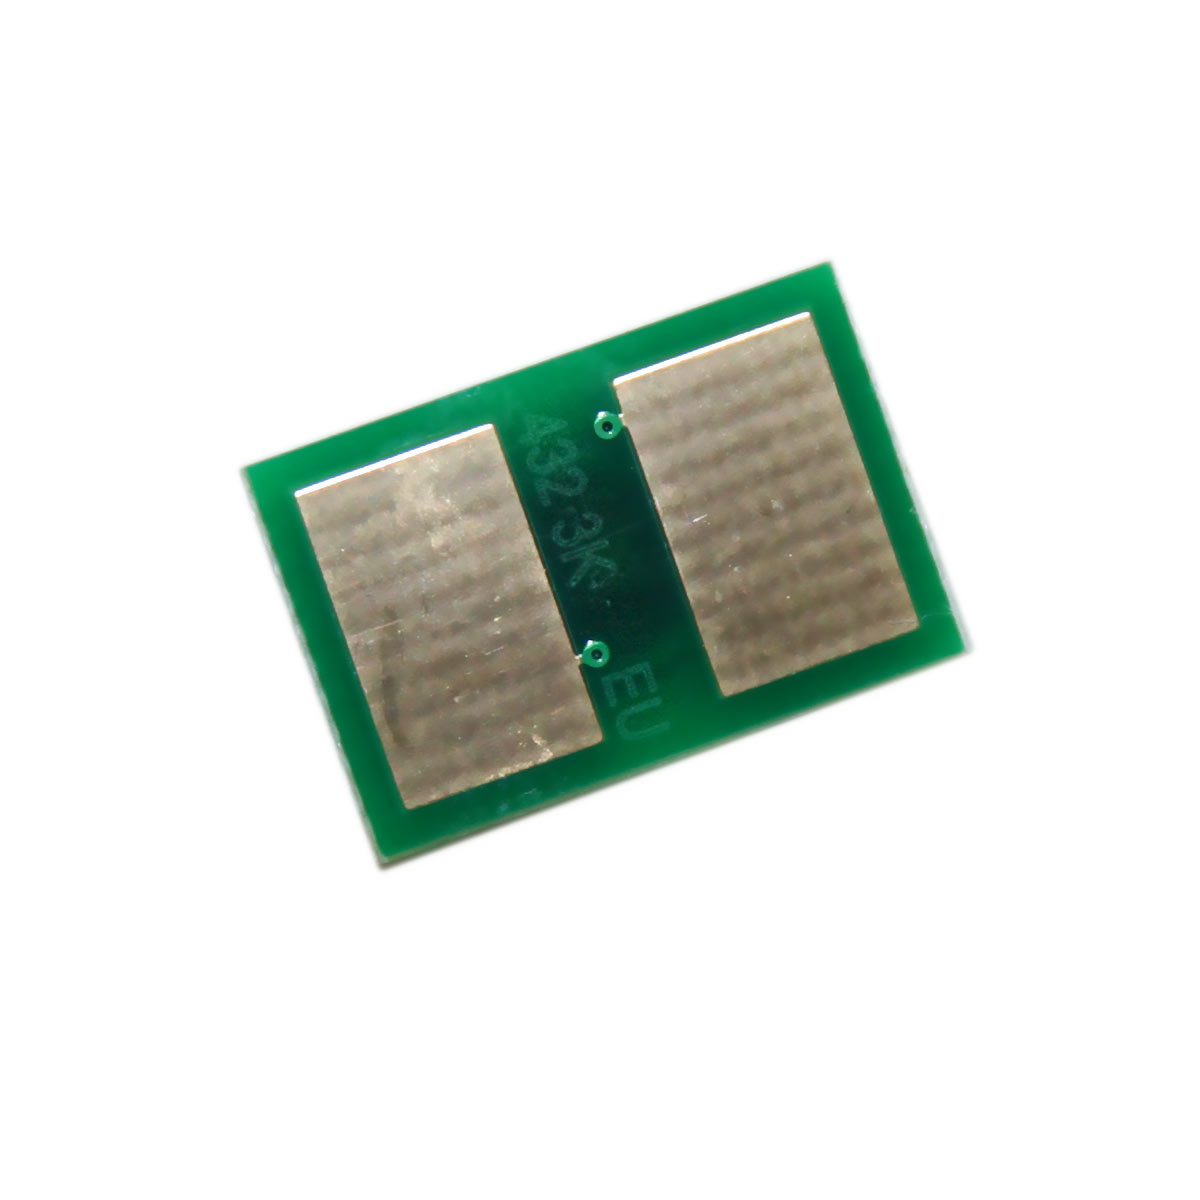 Counter chip OKI MB 562